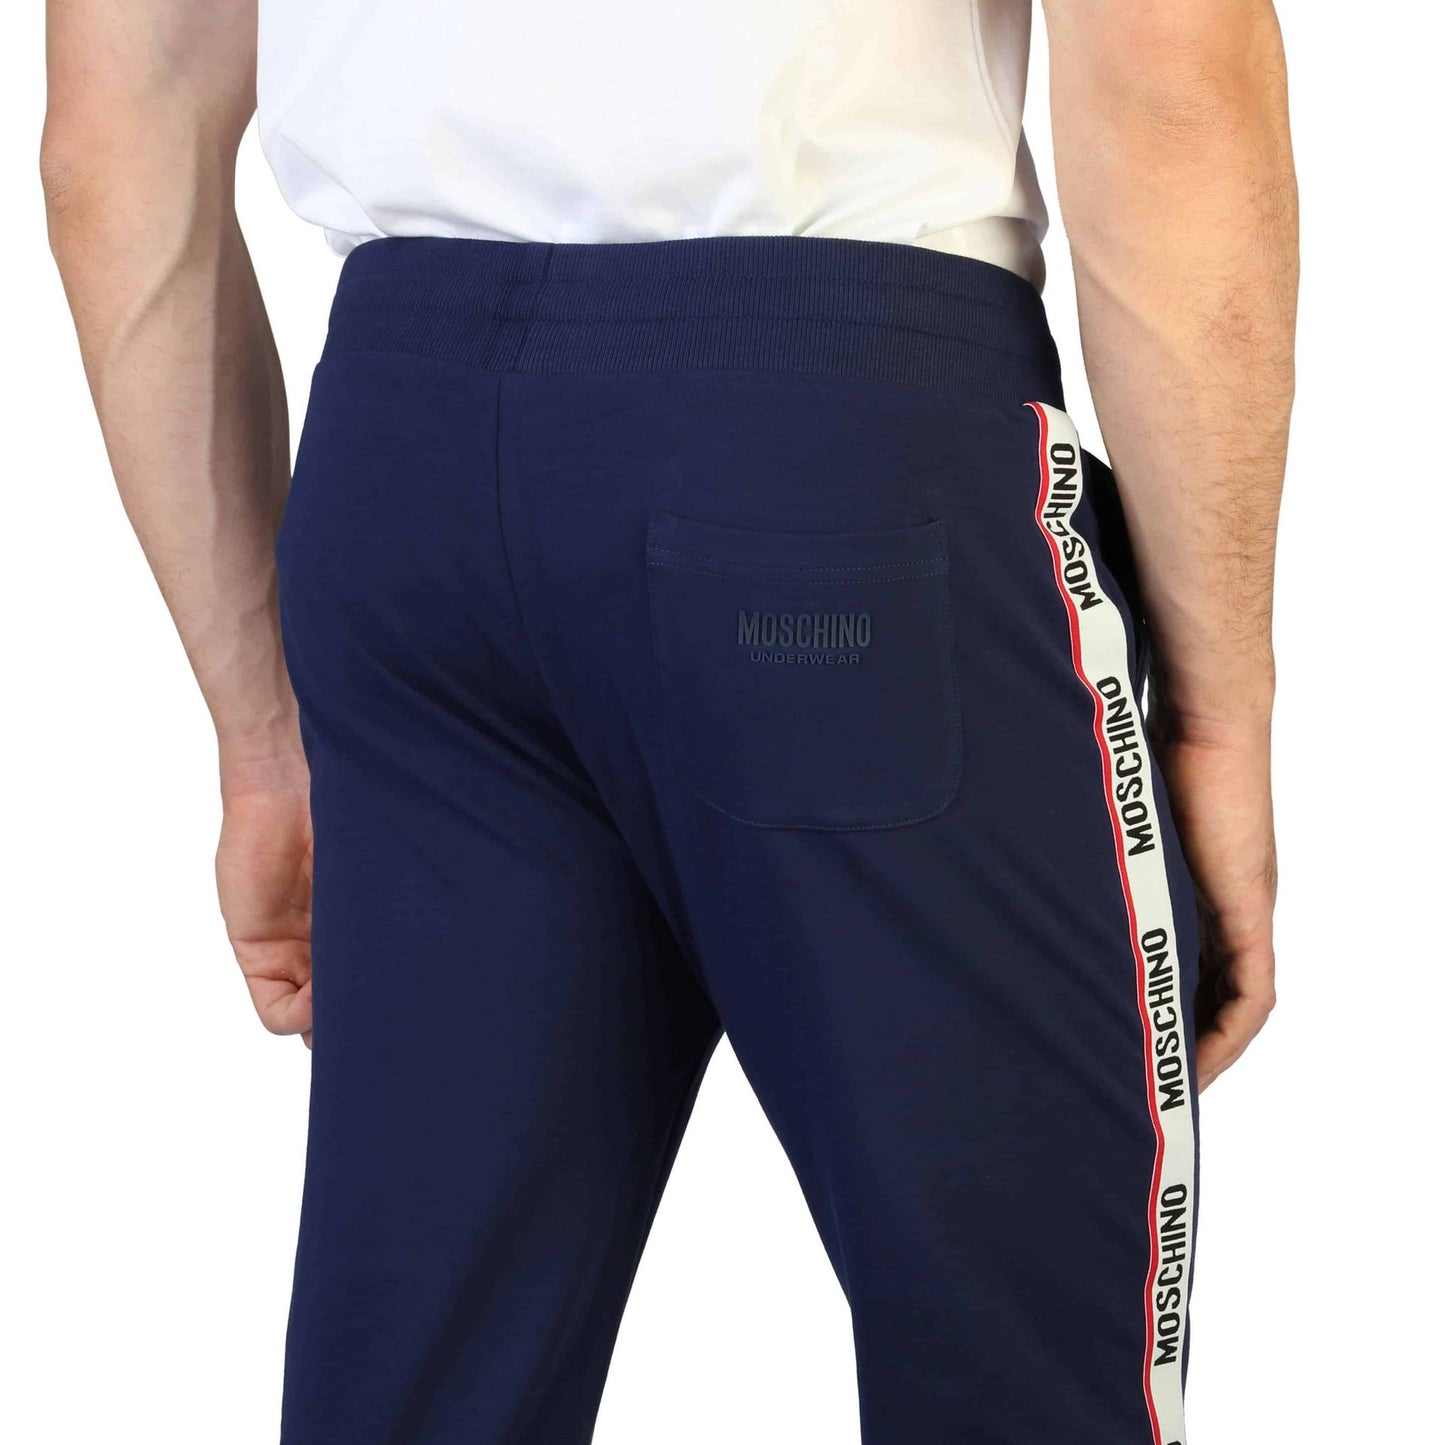 Moschino jogging pants 